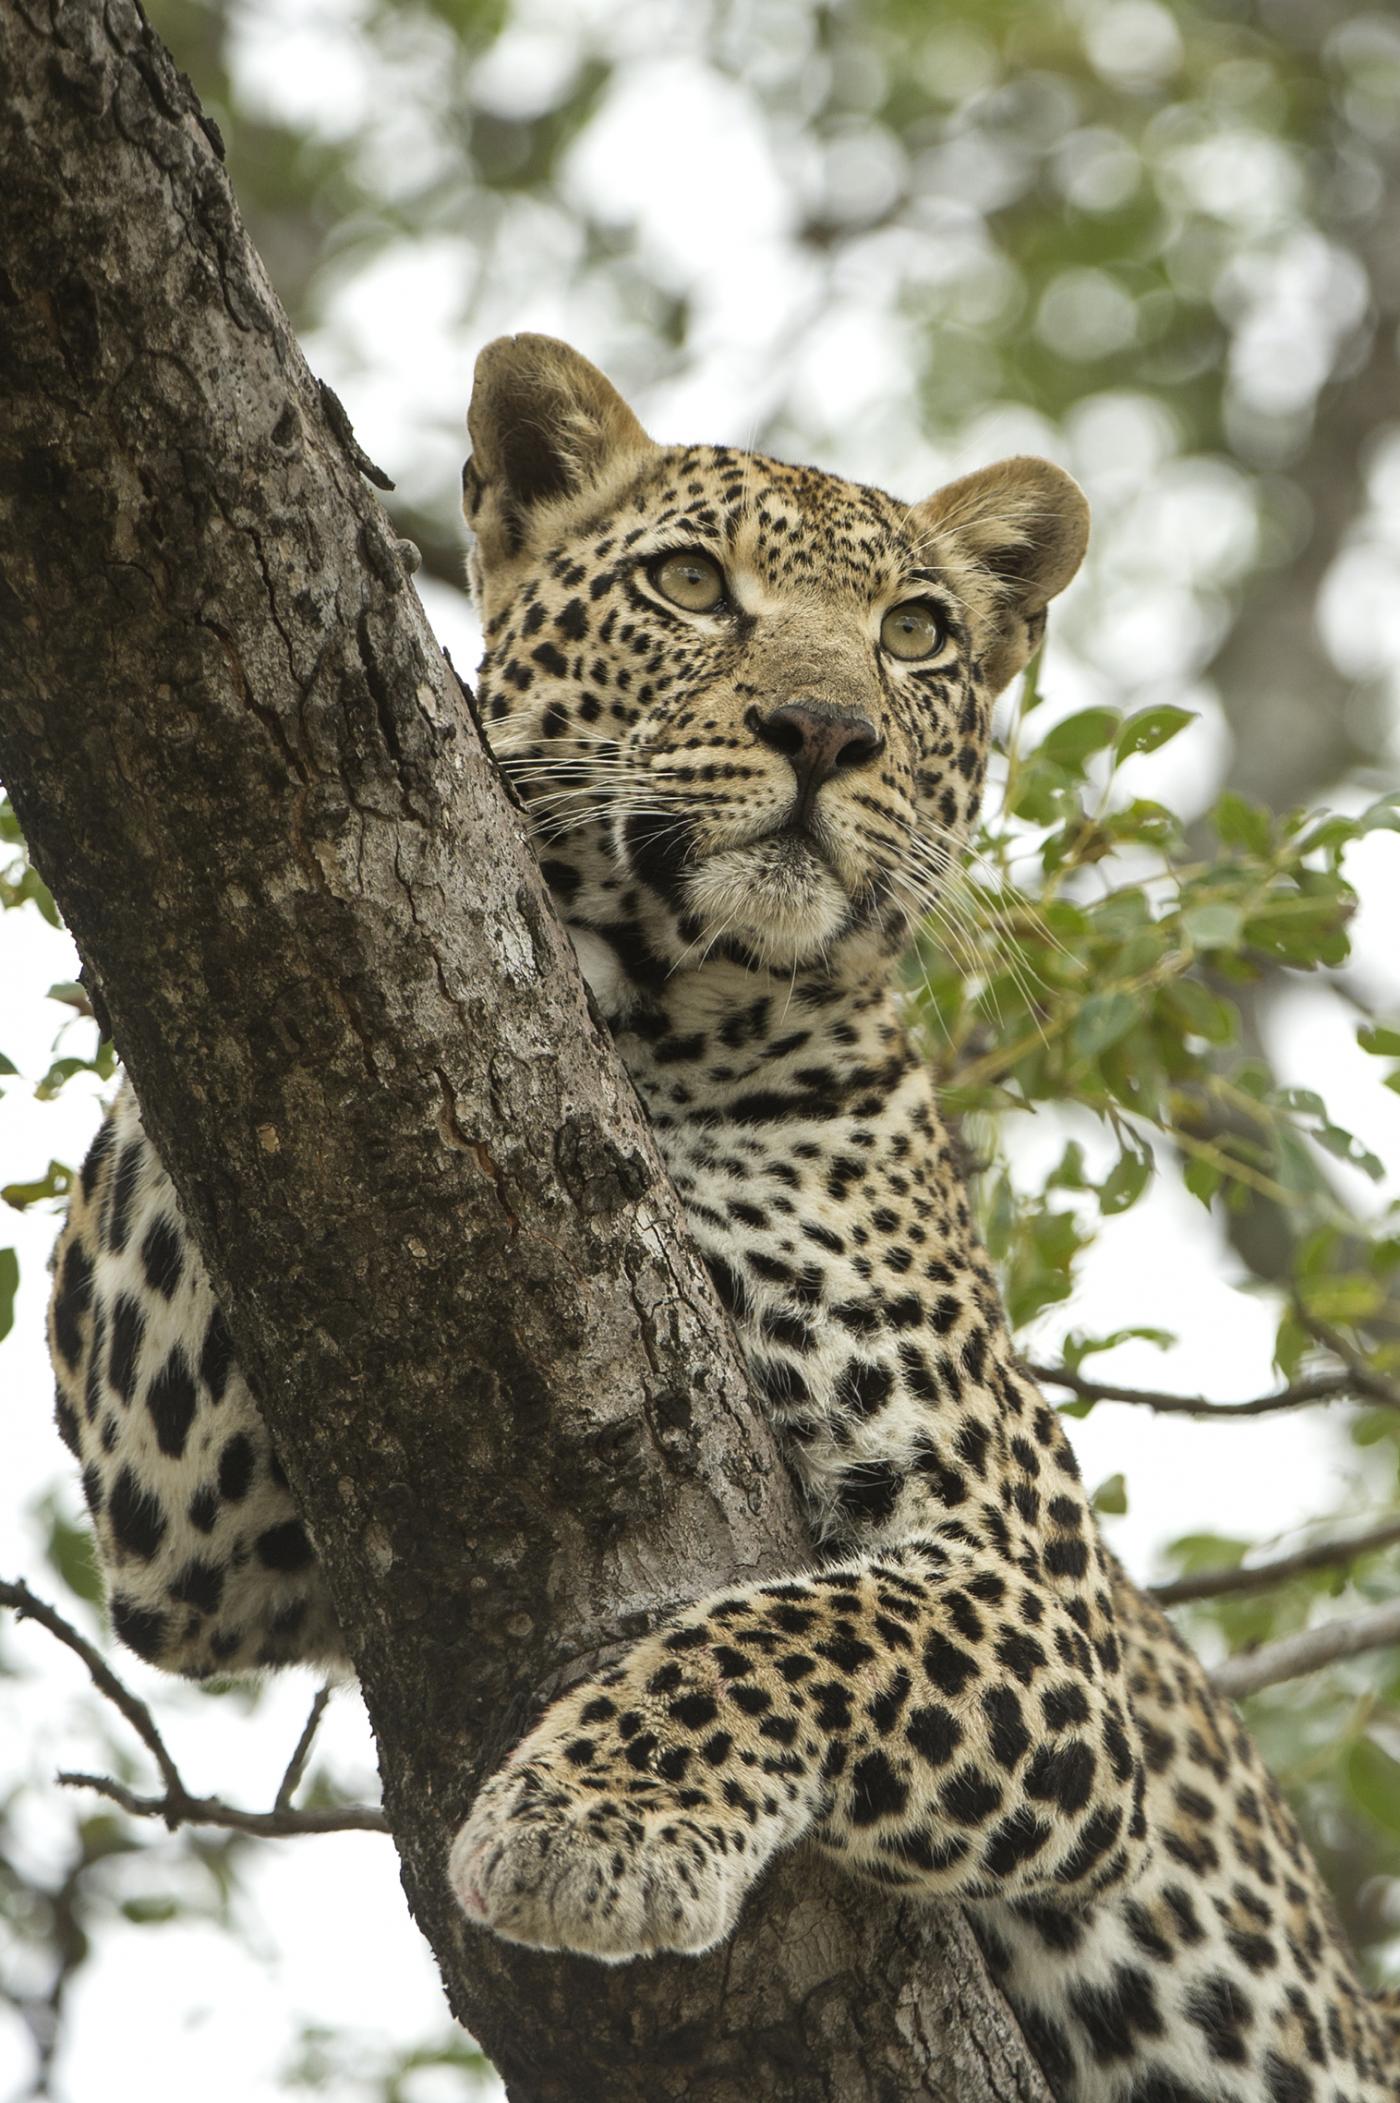 Singita Castleton promotes wildlife conservation and anti-poaching.